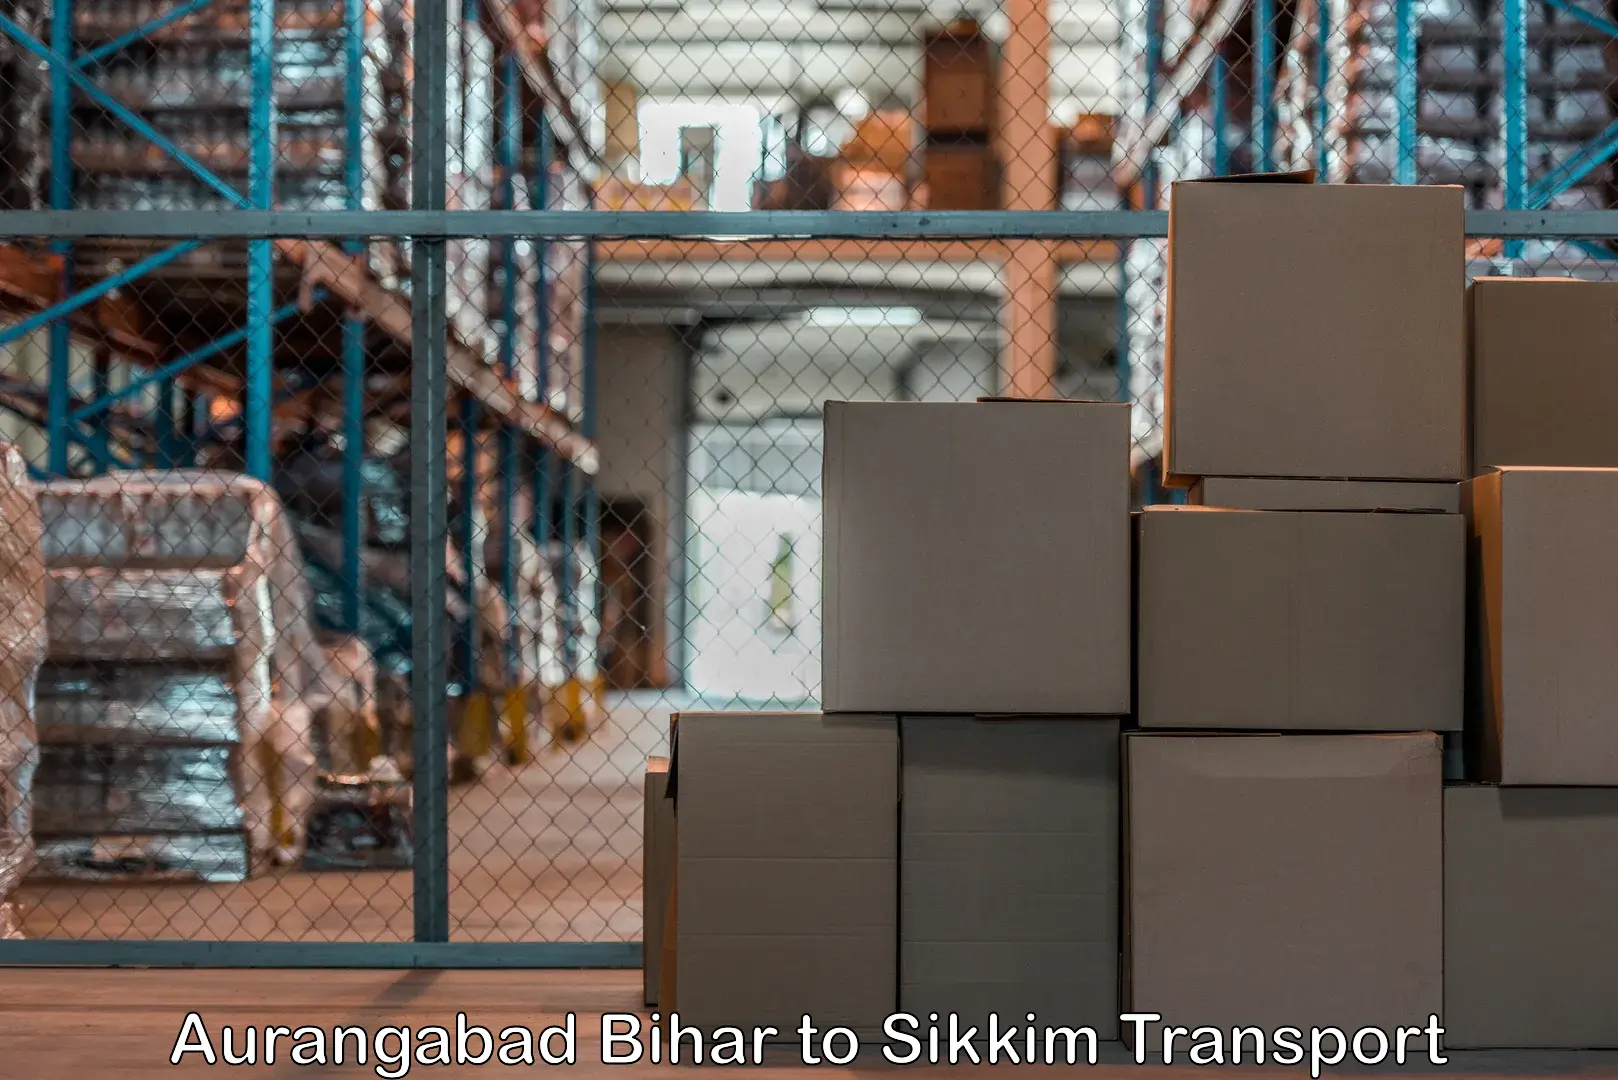 Container transport service Aurangabad Bihar to Pelling